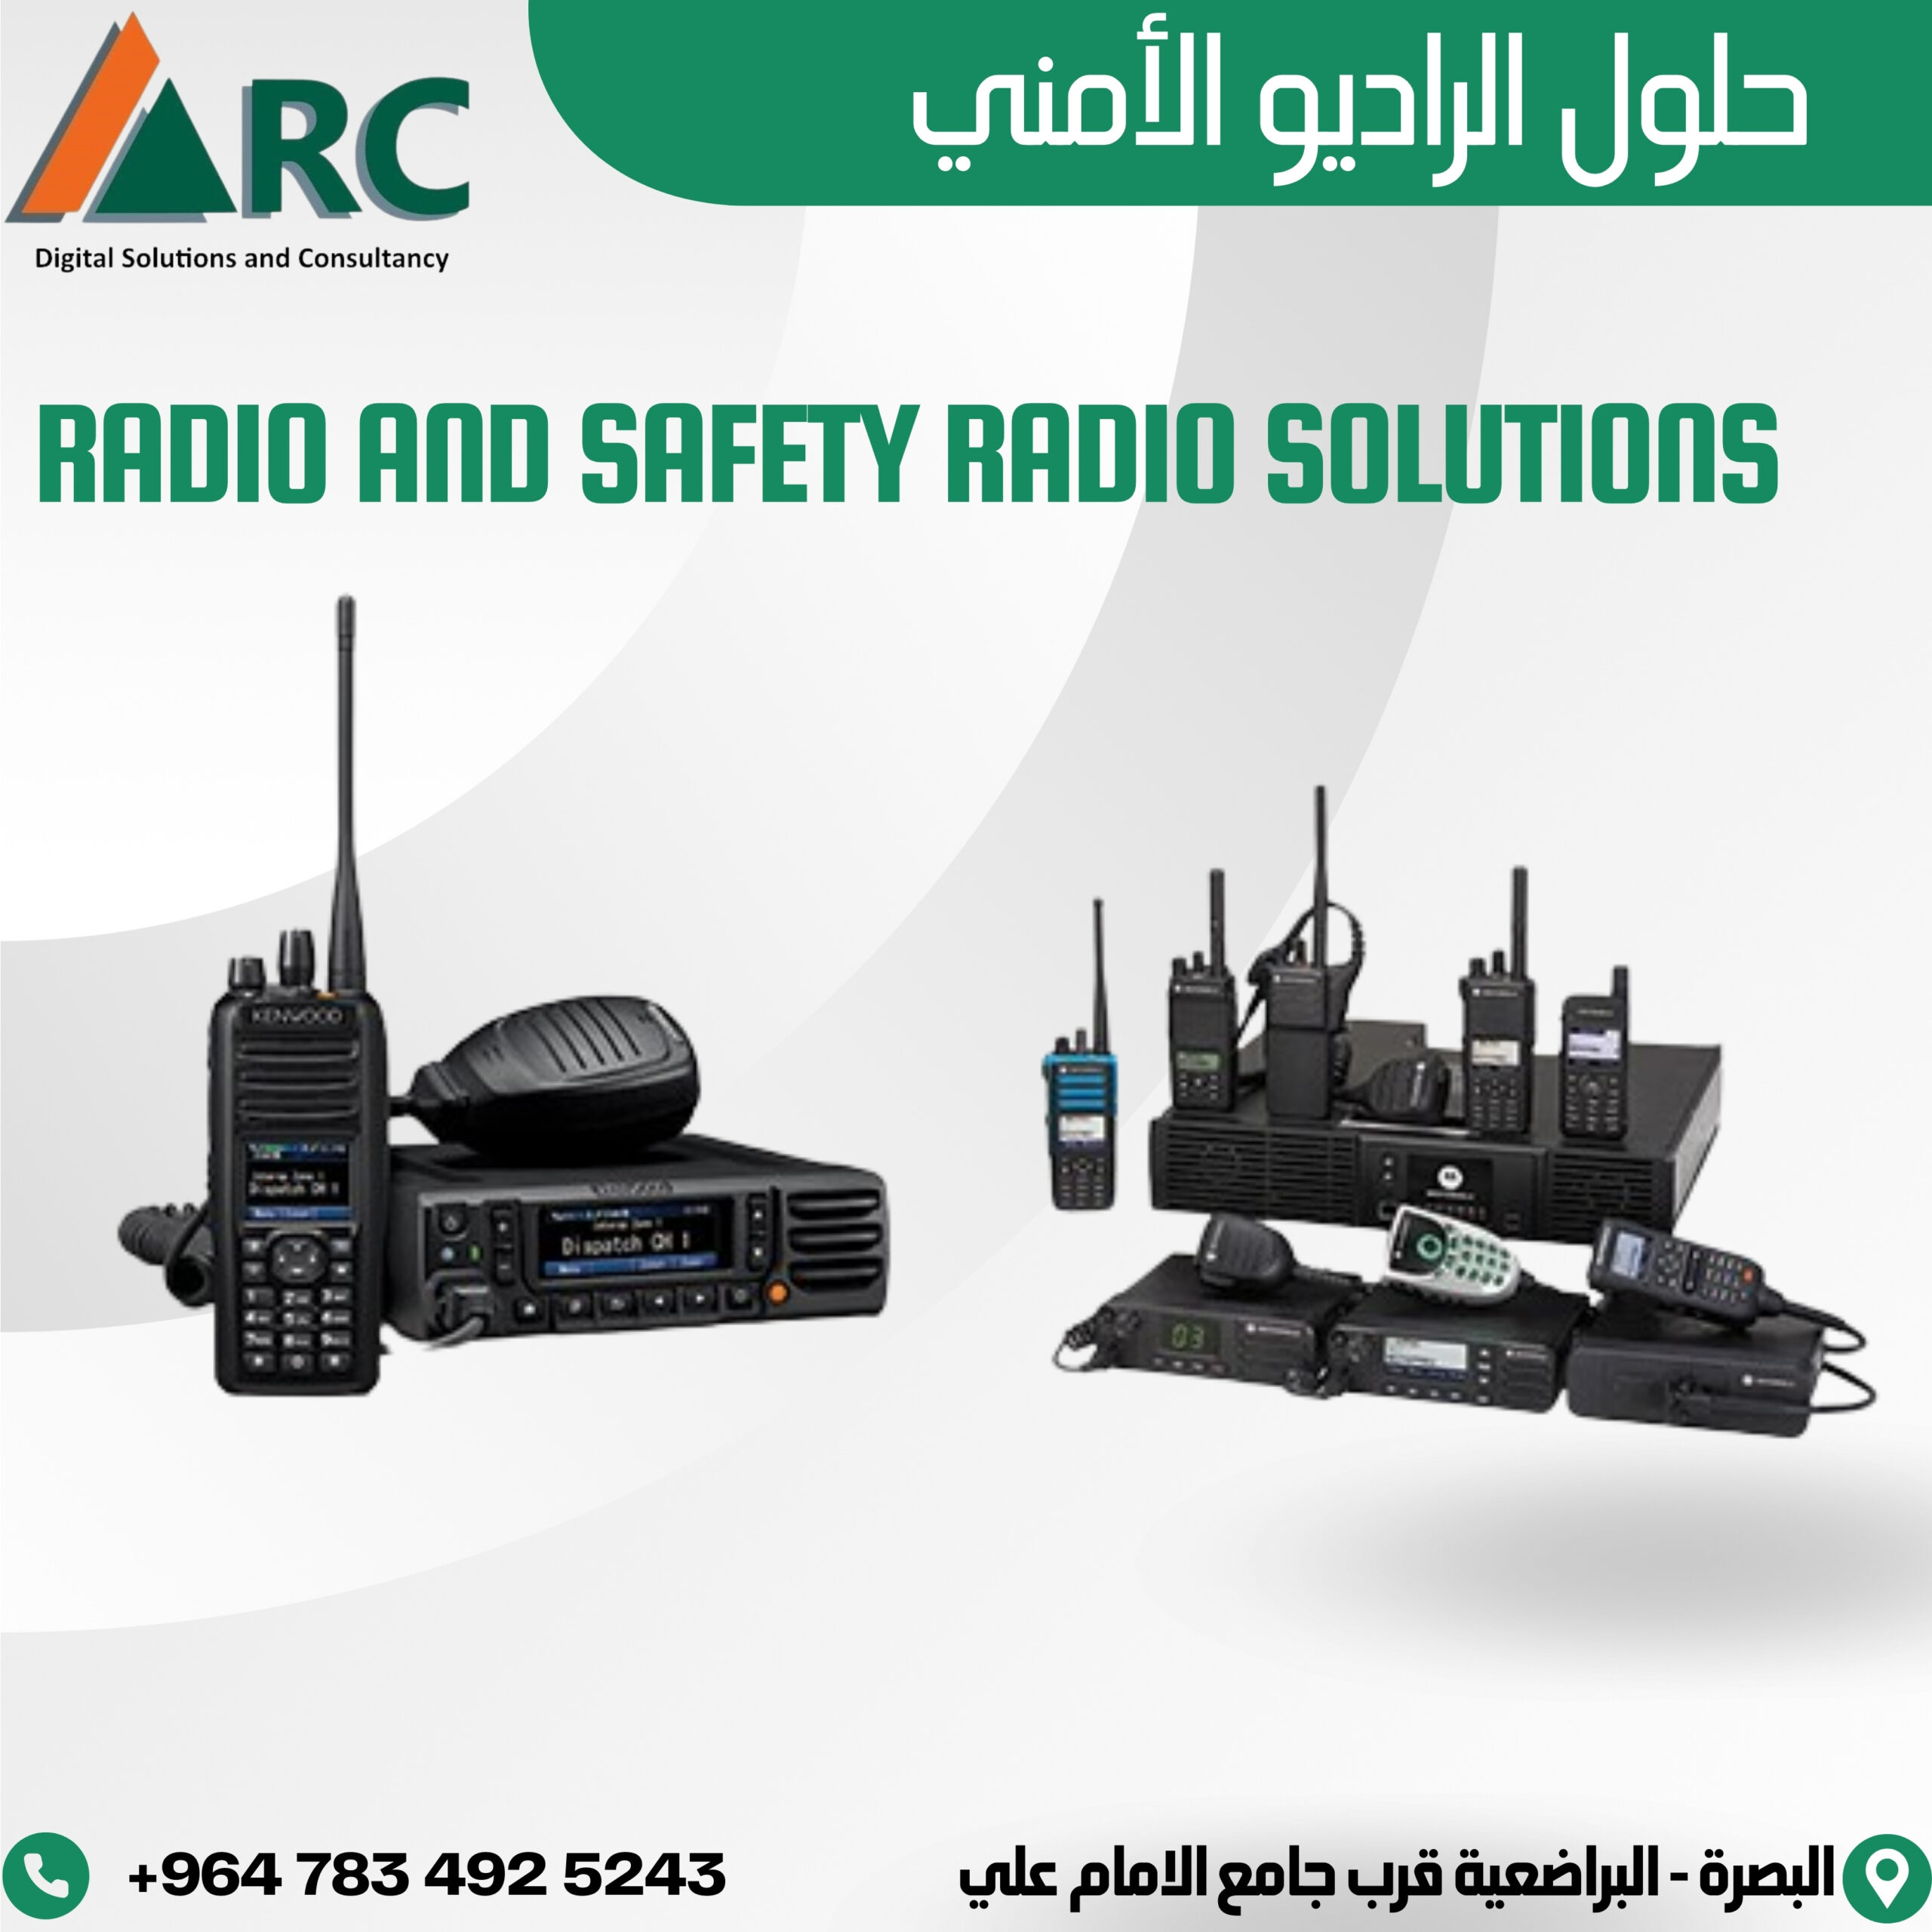 RADIO AND SAFETY RADIO SOLUTIONS